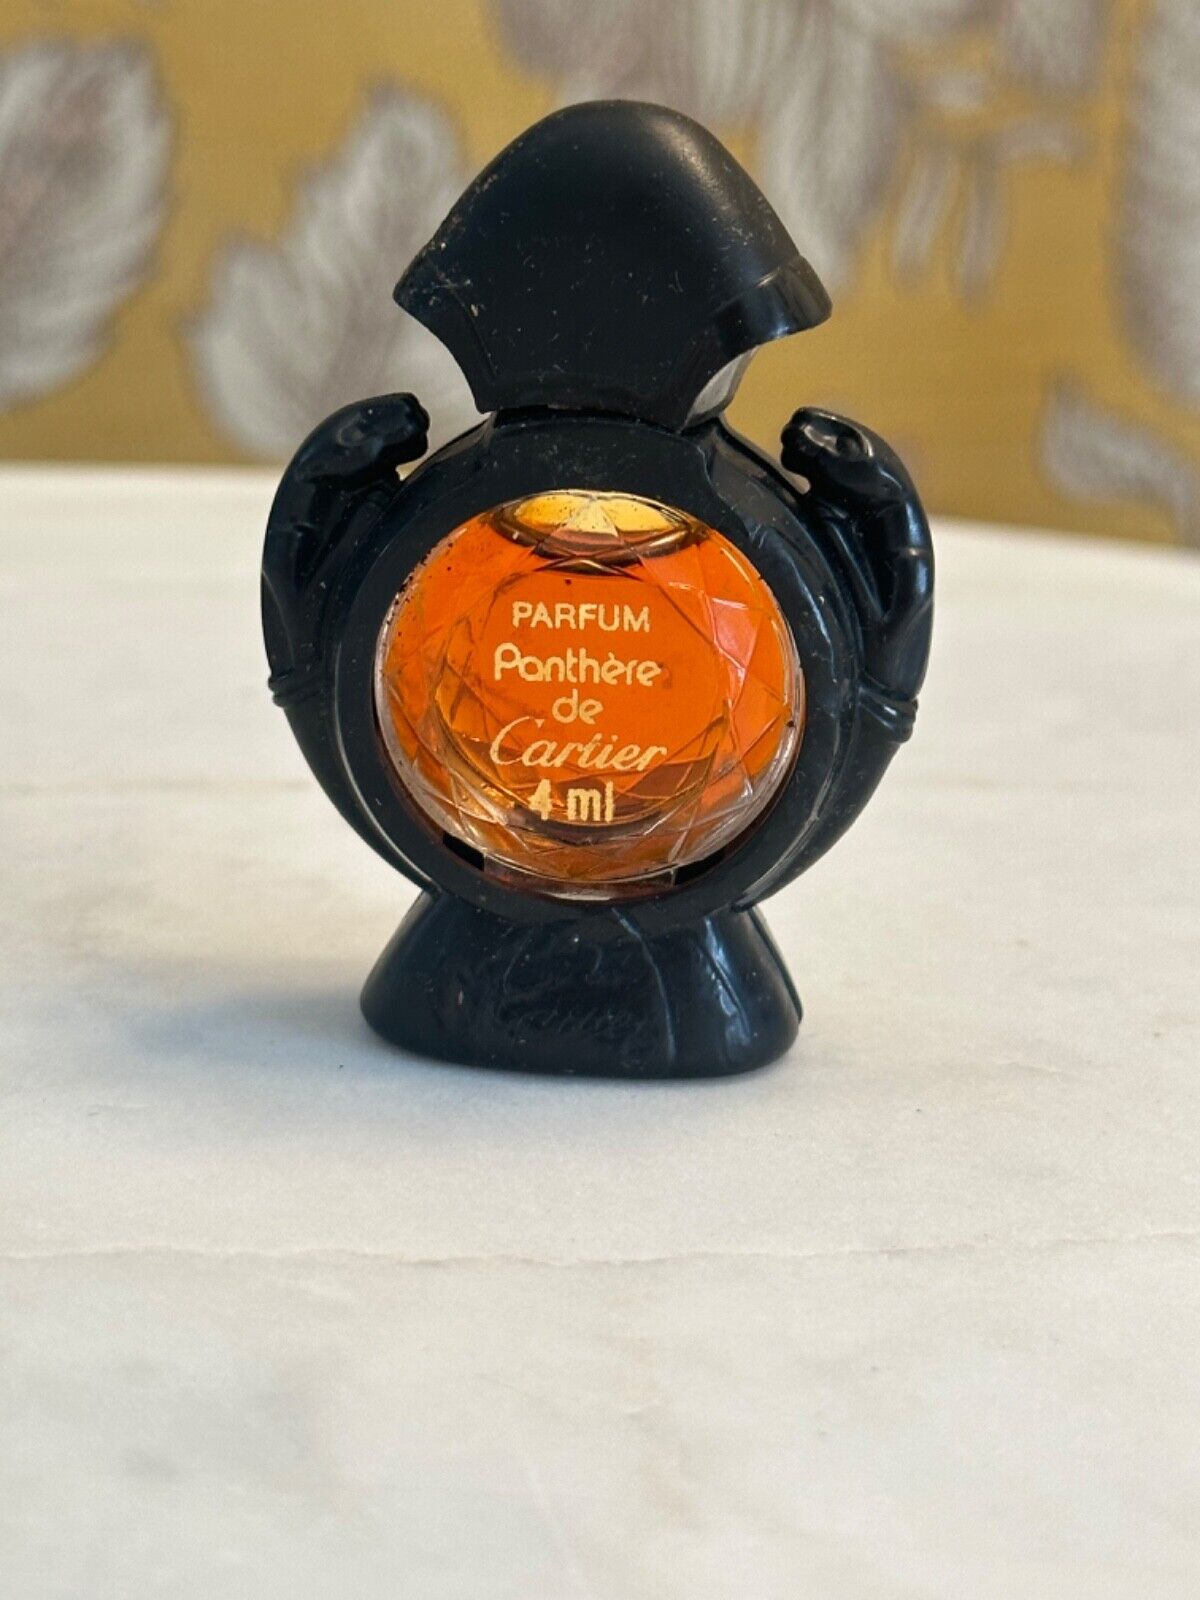 Cartier De Panthere miniature fragrance collection collective VERY RARE Vintage